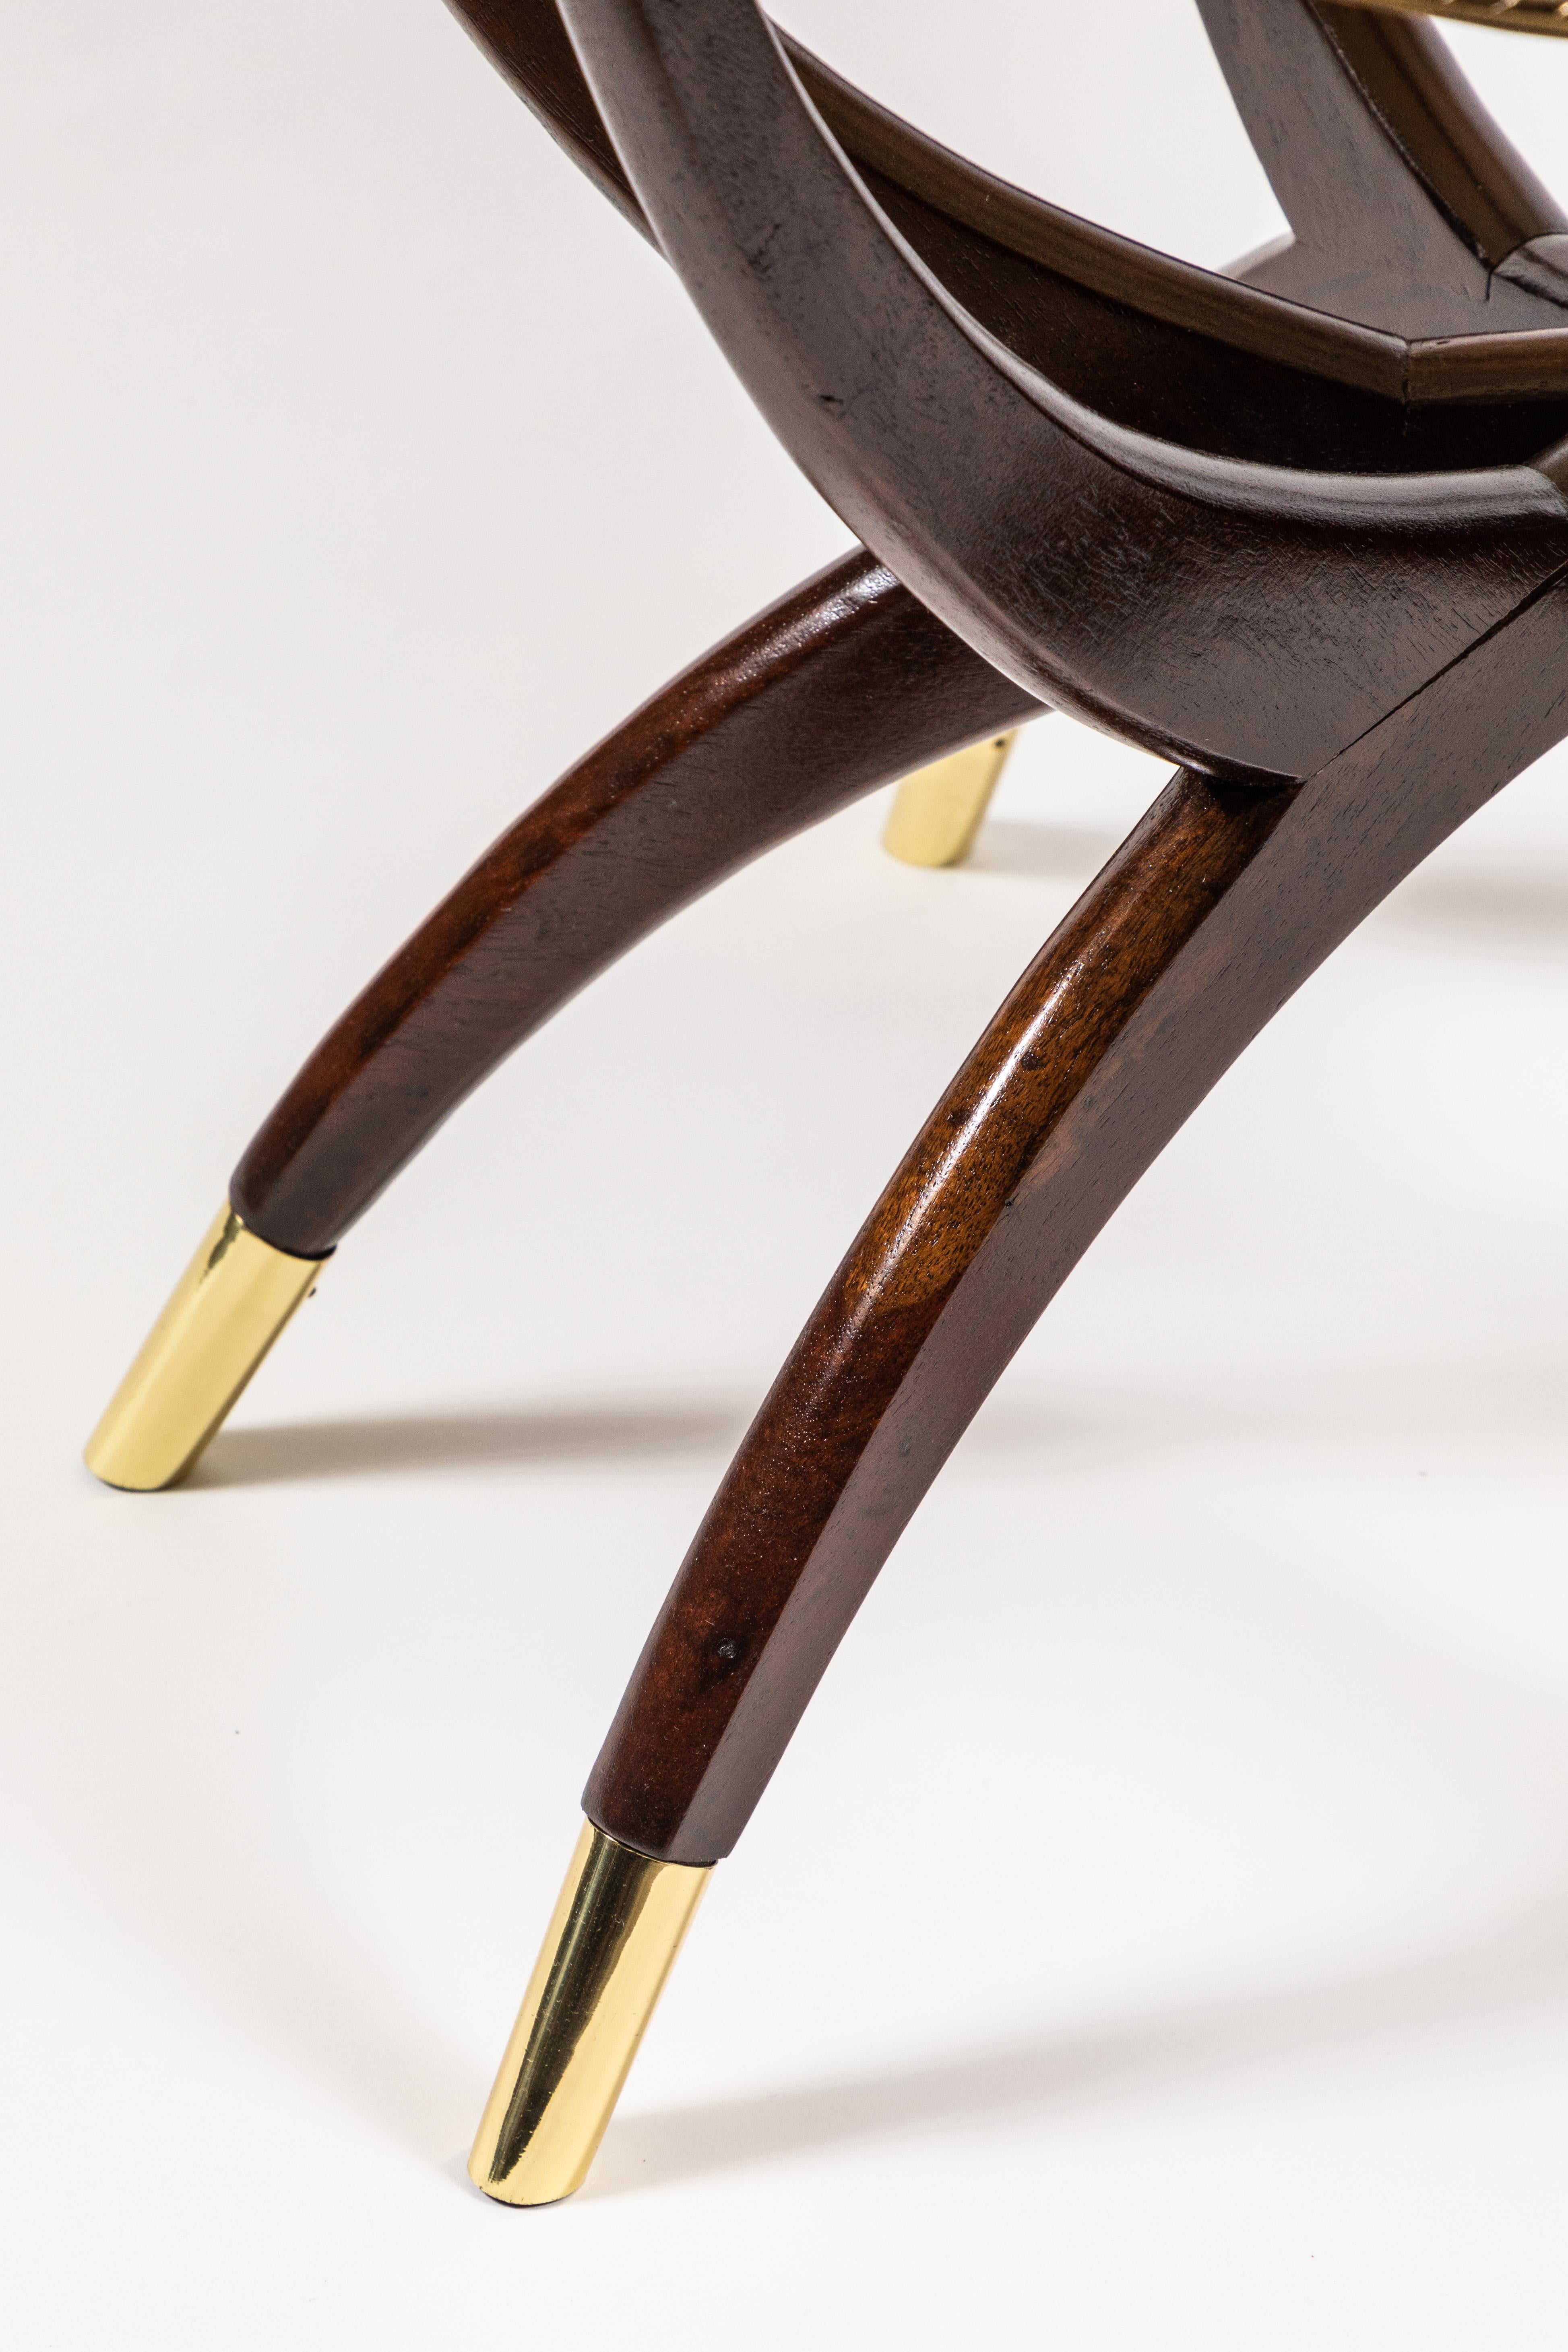 Moorish Midcentury Spider Leg Folding Tray Table with Brass Tray